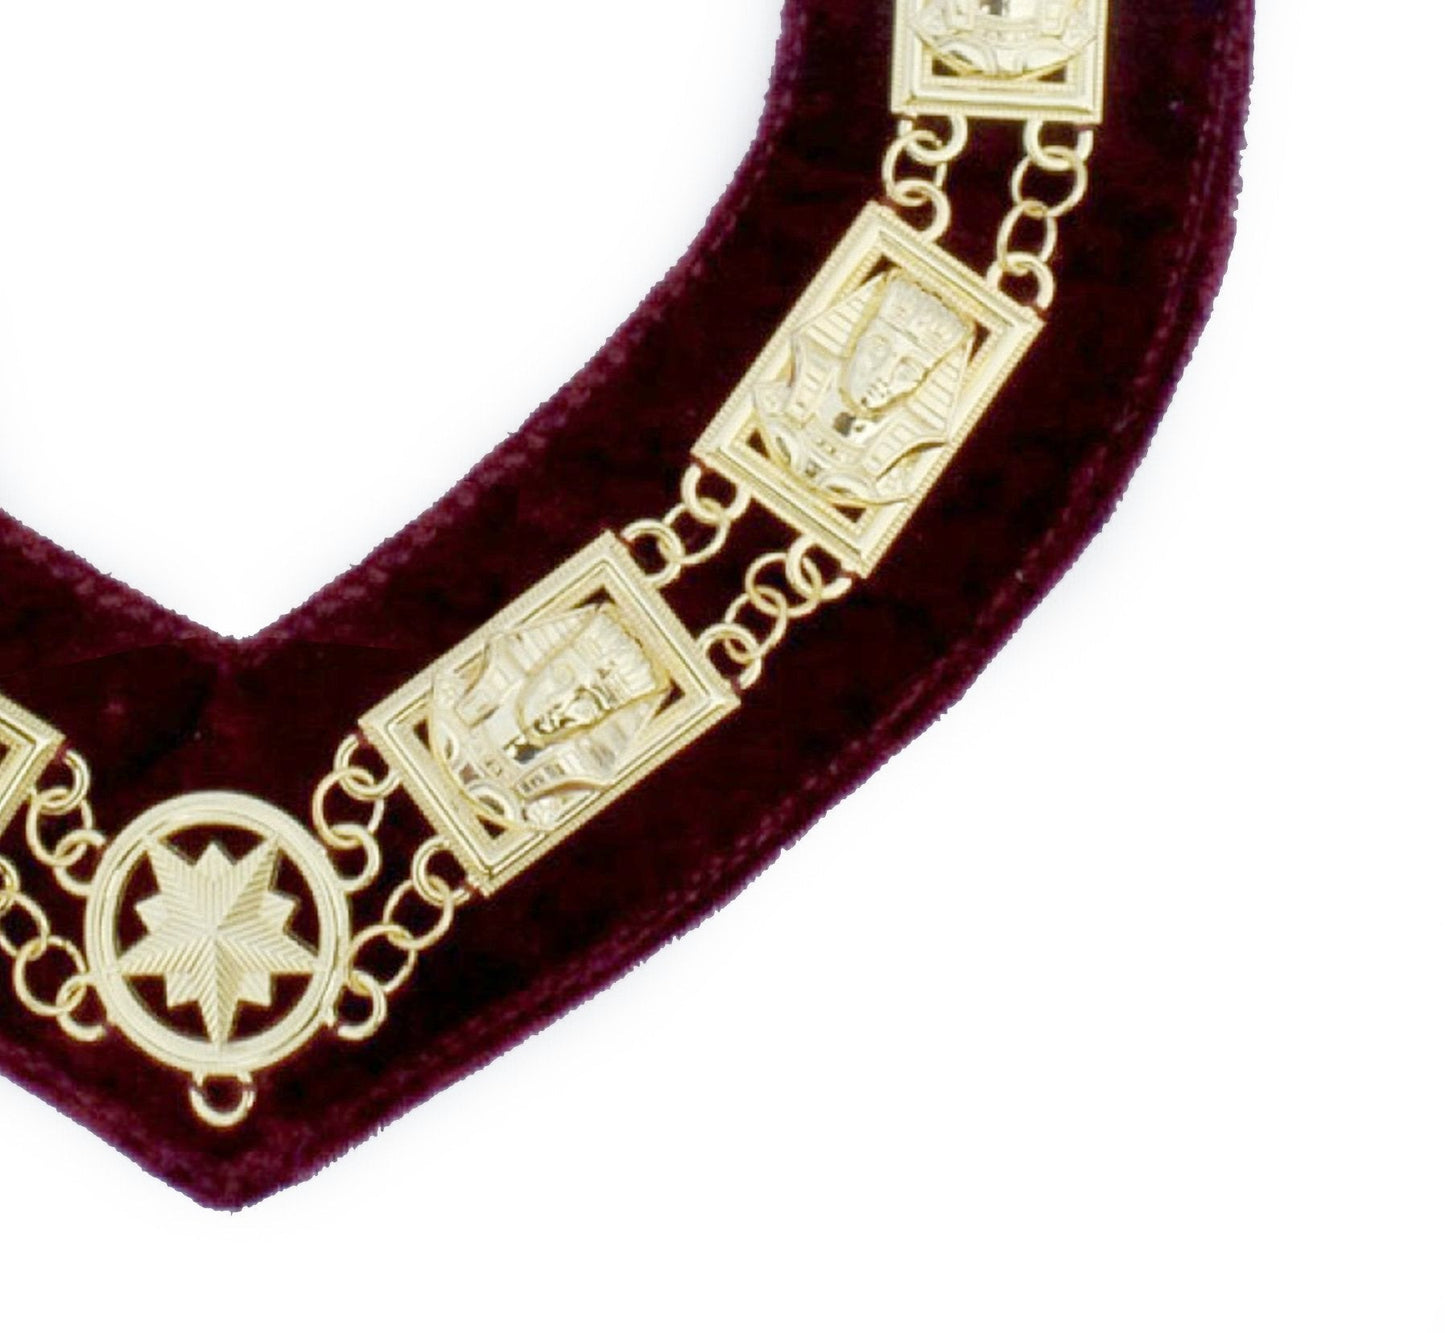 Daughters of Sphinx Masonic Chain Collar - Gold Plated-Chain Collars-Masonic Makers